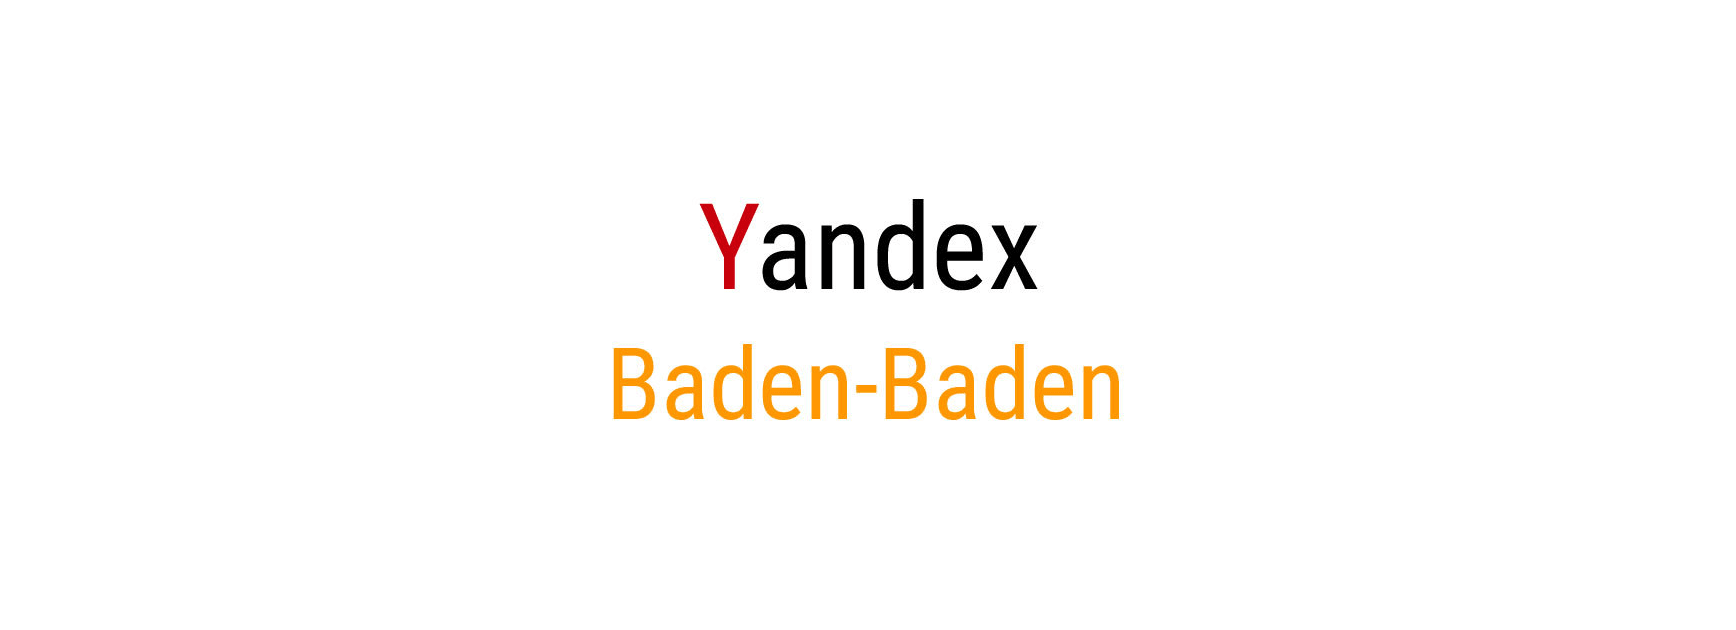 Baden-Baden from Yandex